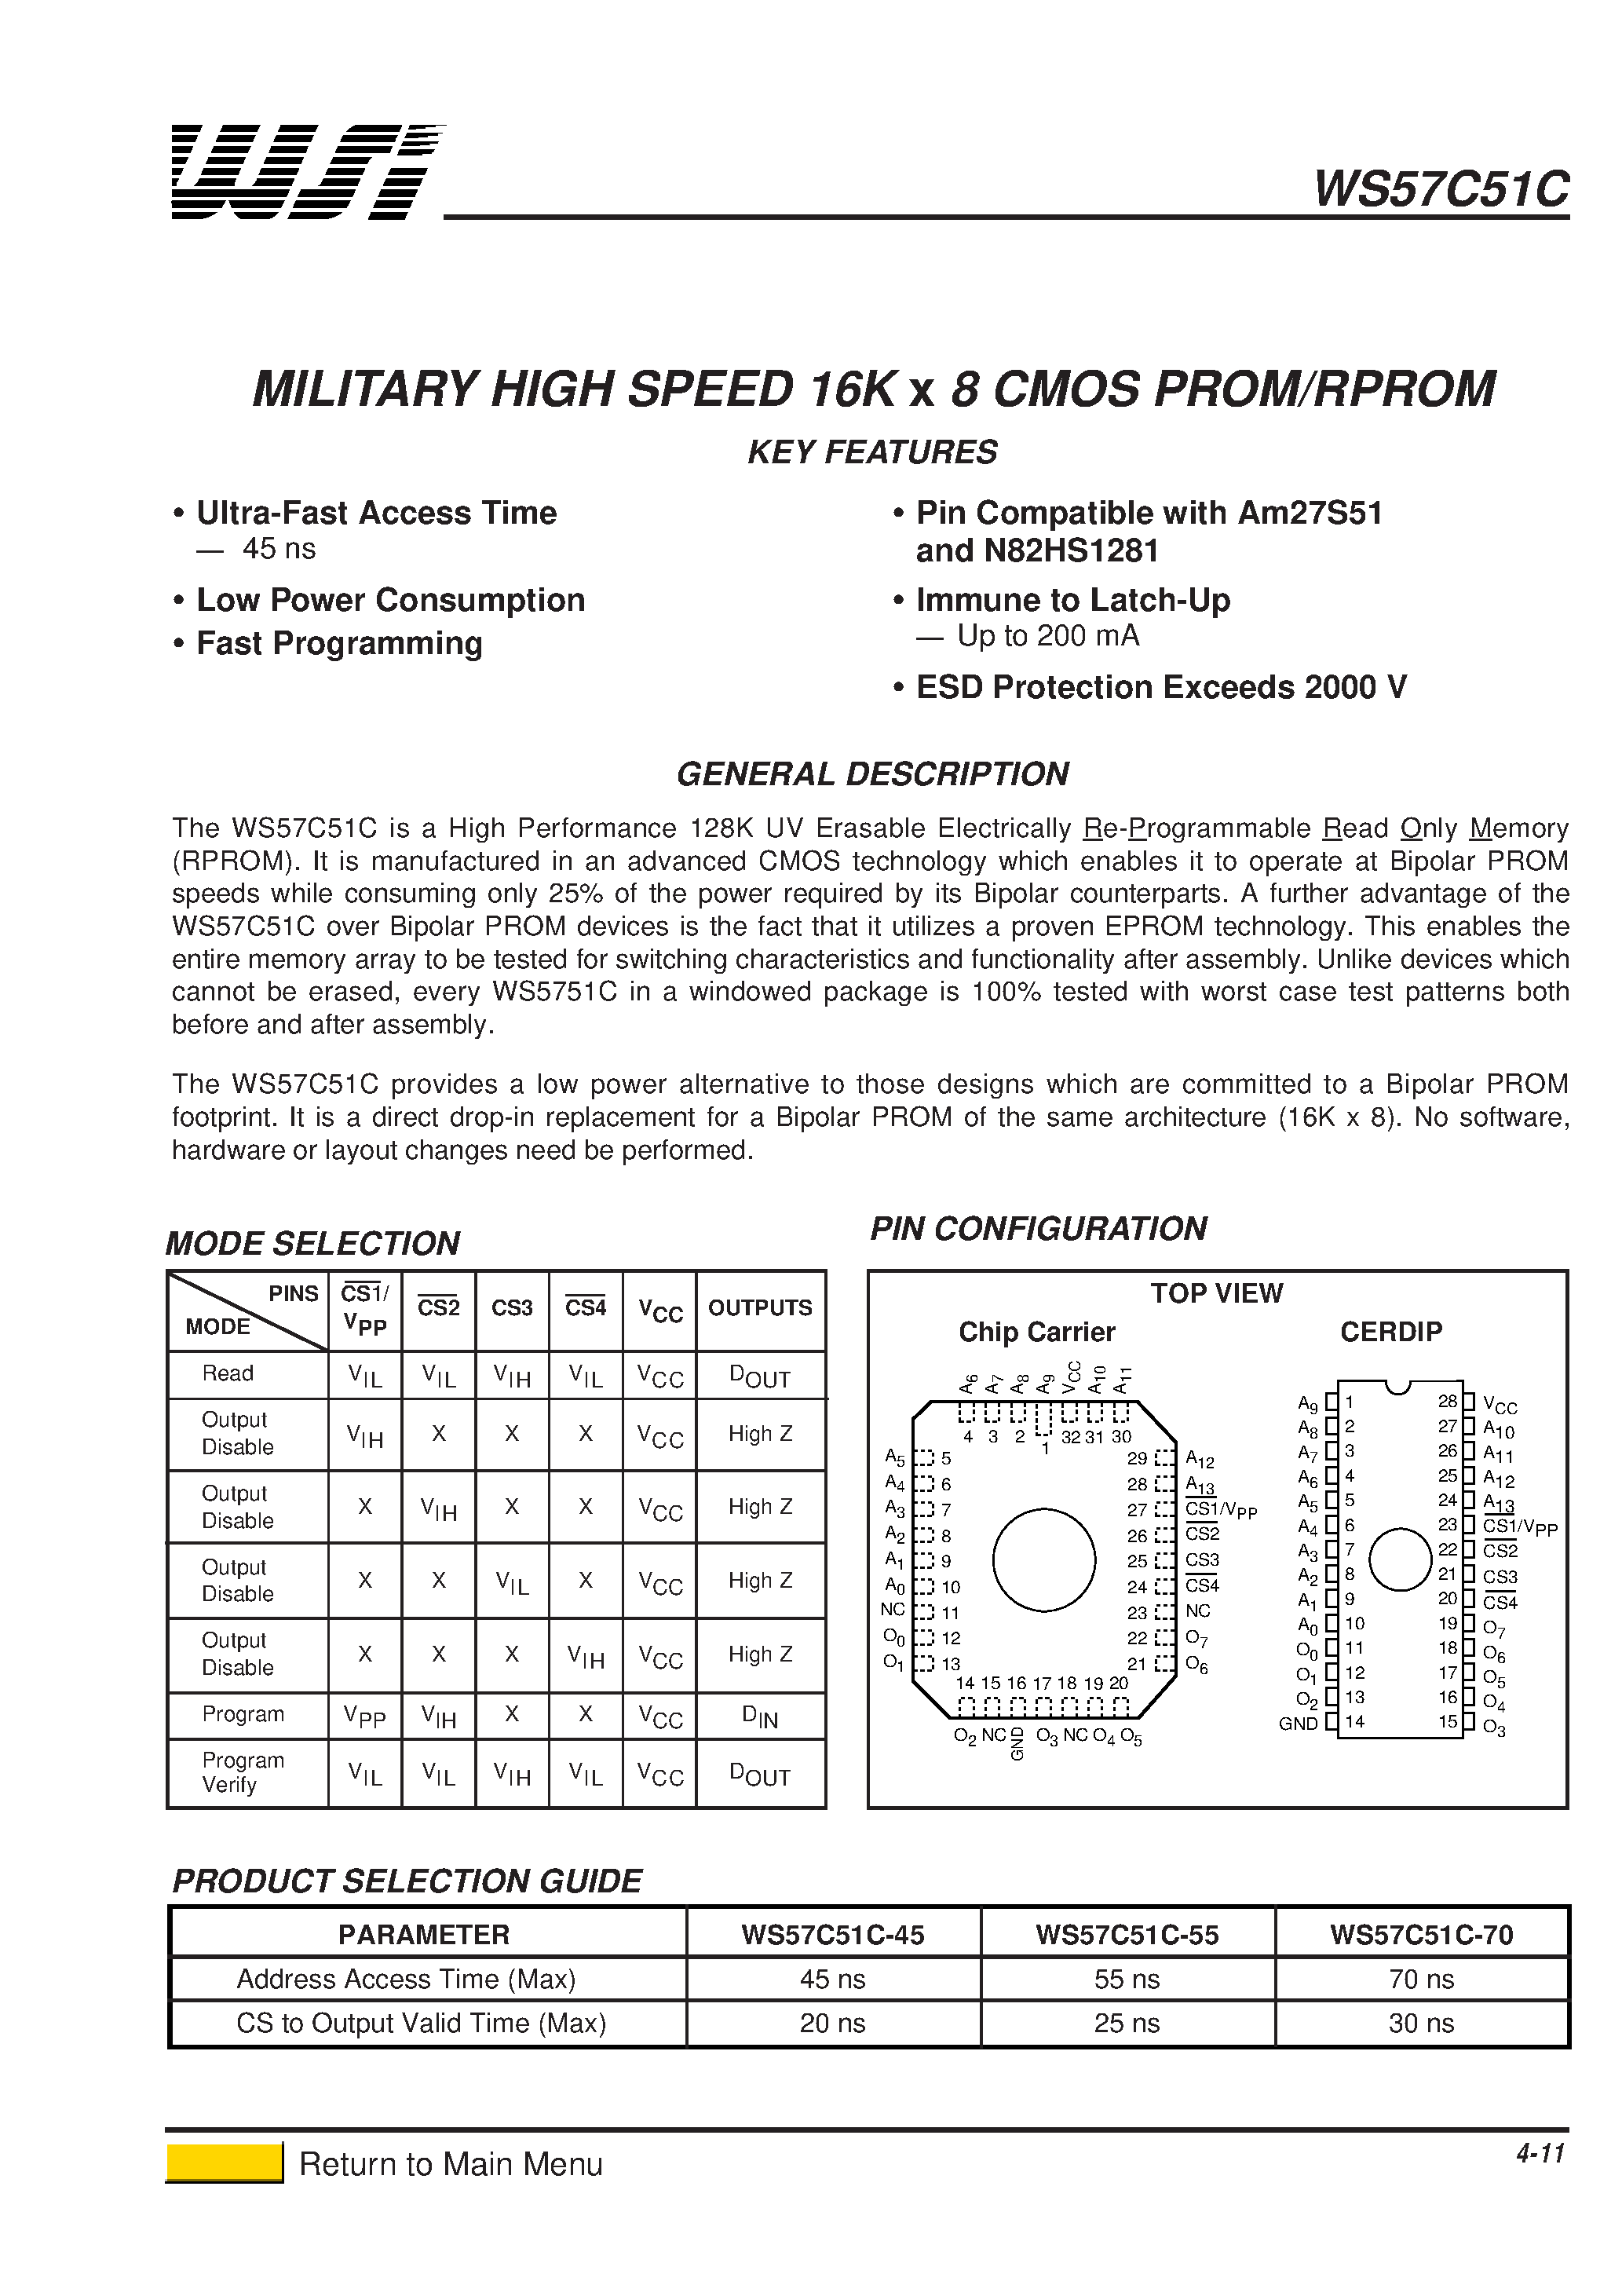 Даташит WS57C51C-70 - MILITARY HIGH SPEED 16K x 8 CMOS PROM/RPROM страница 1